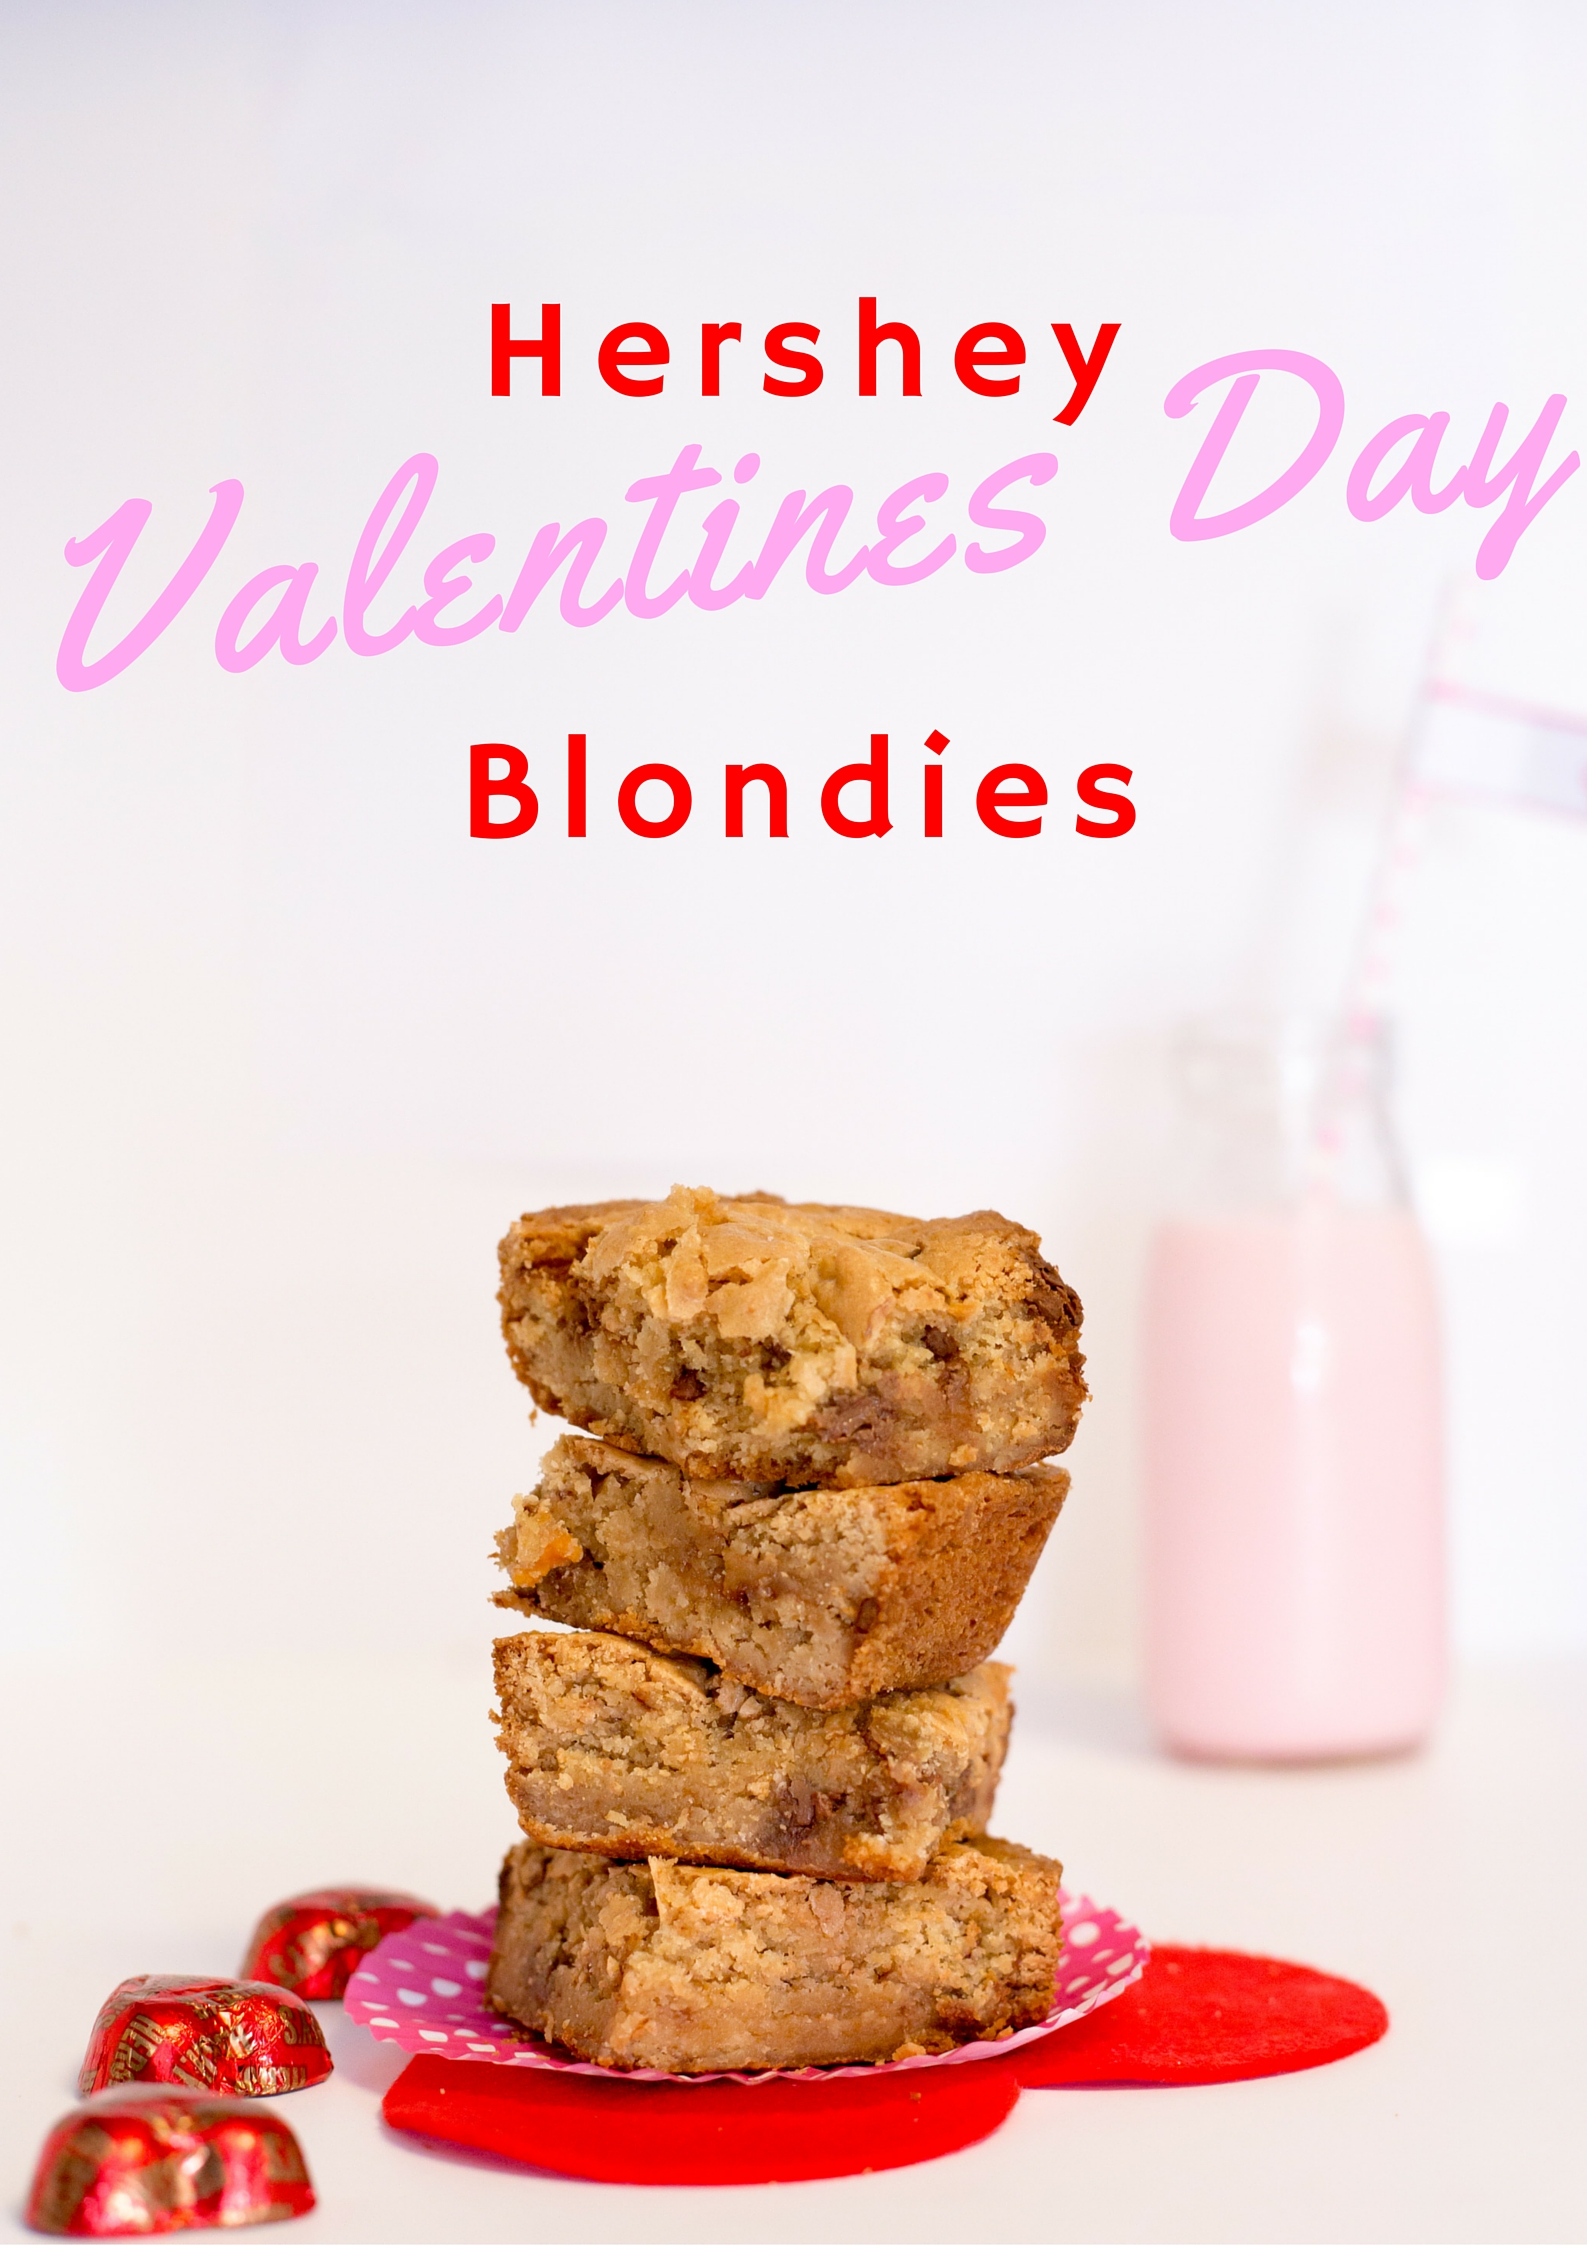 Spread Love with Hershey's Valentine's Day Baskets #HSYMessageOfLove